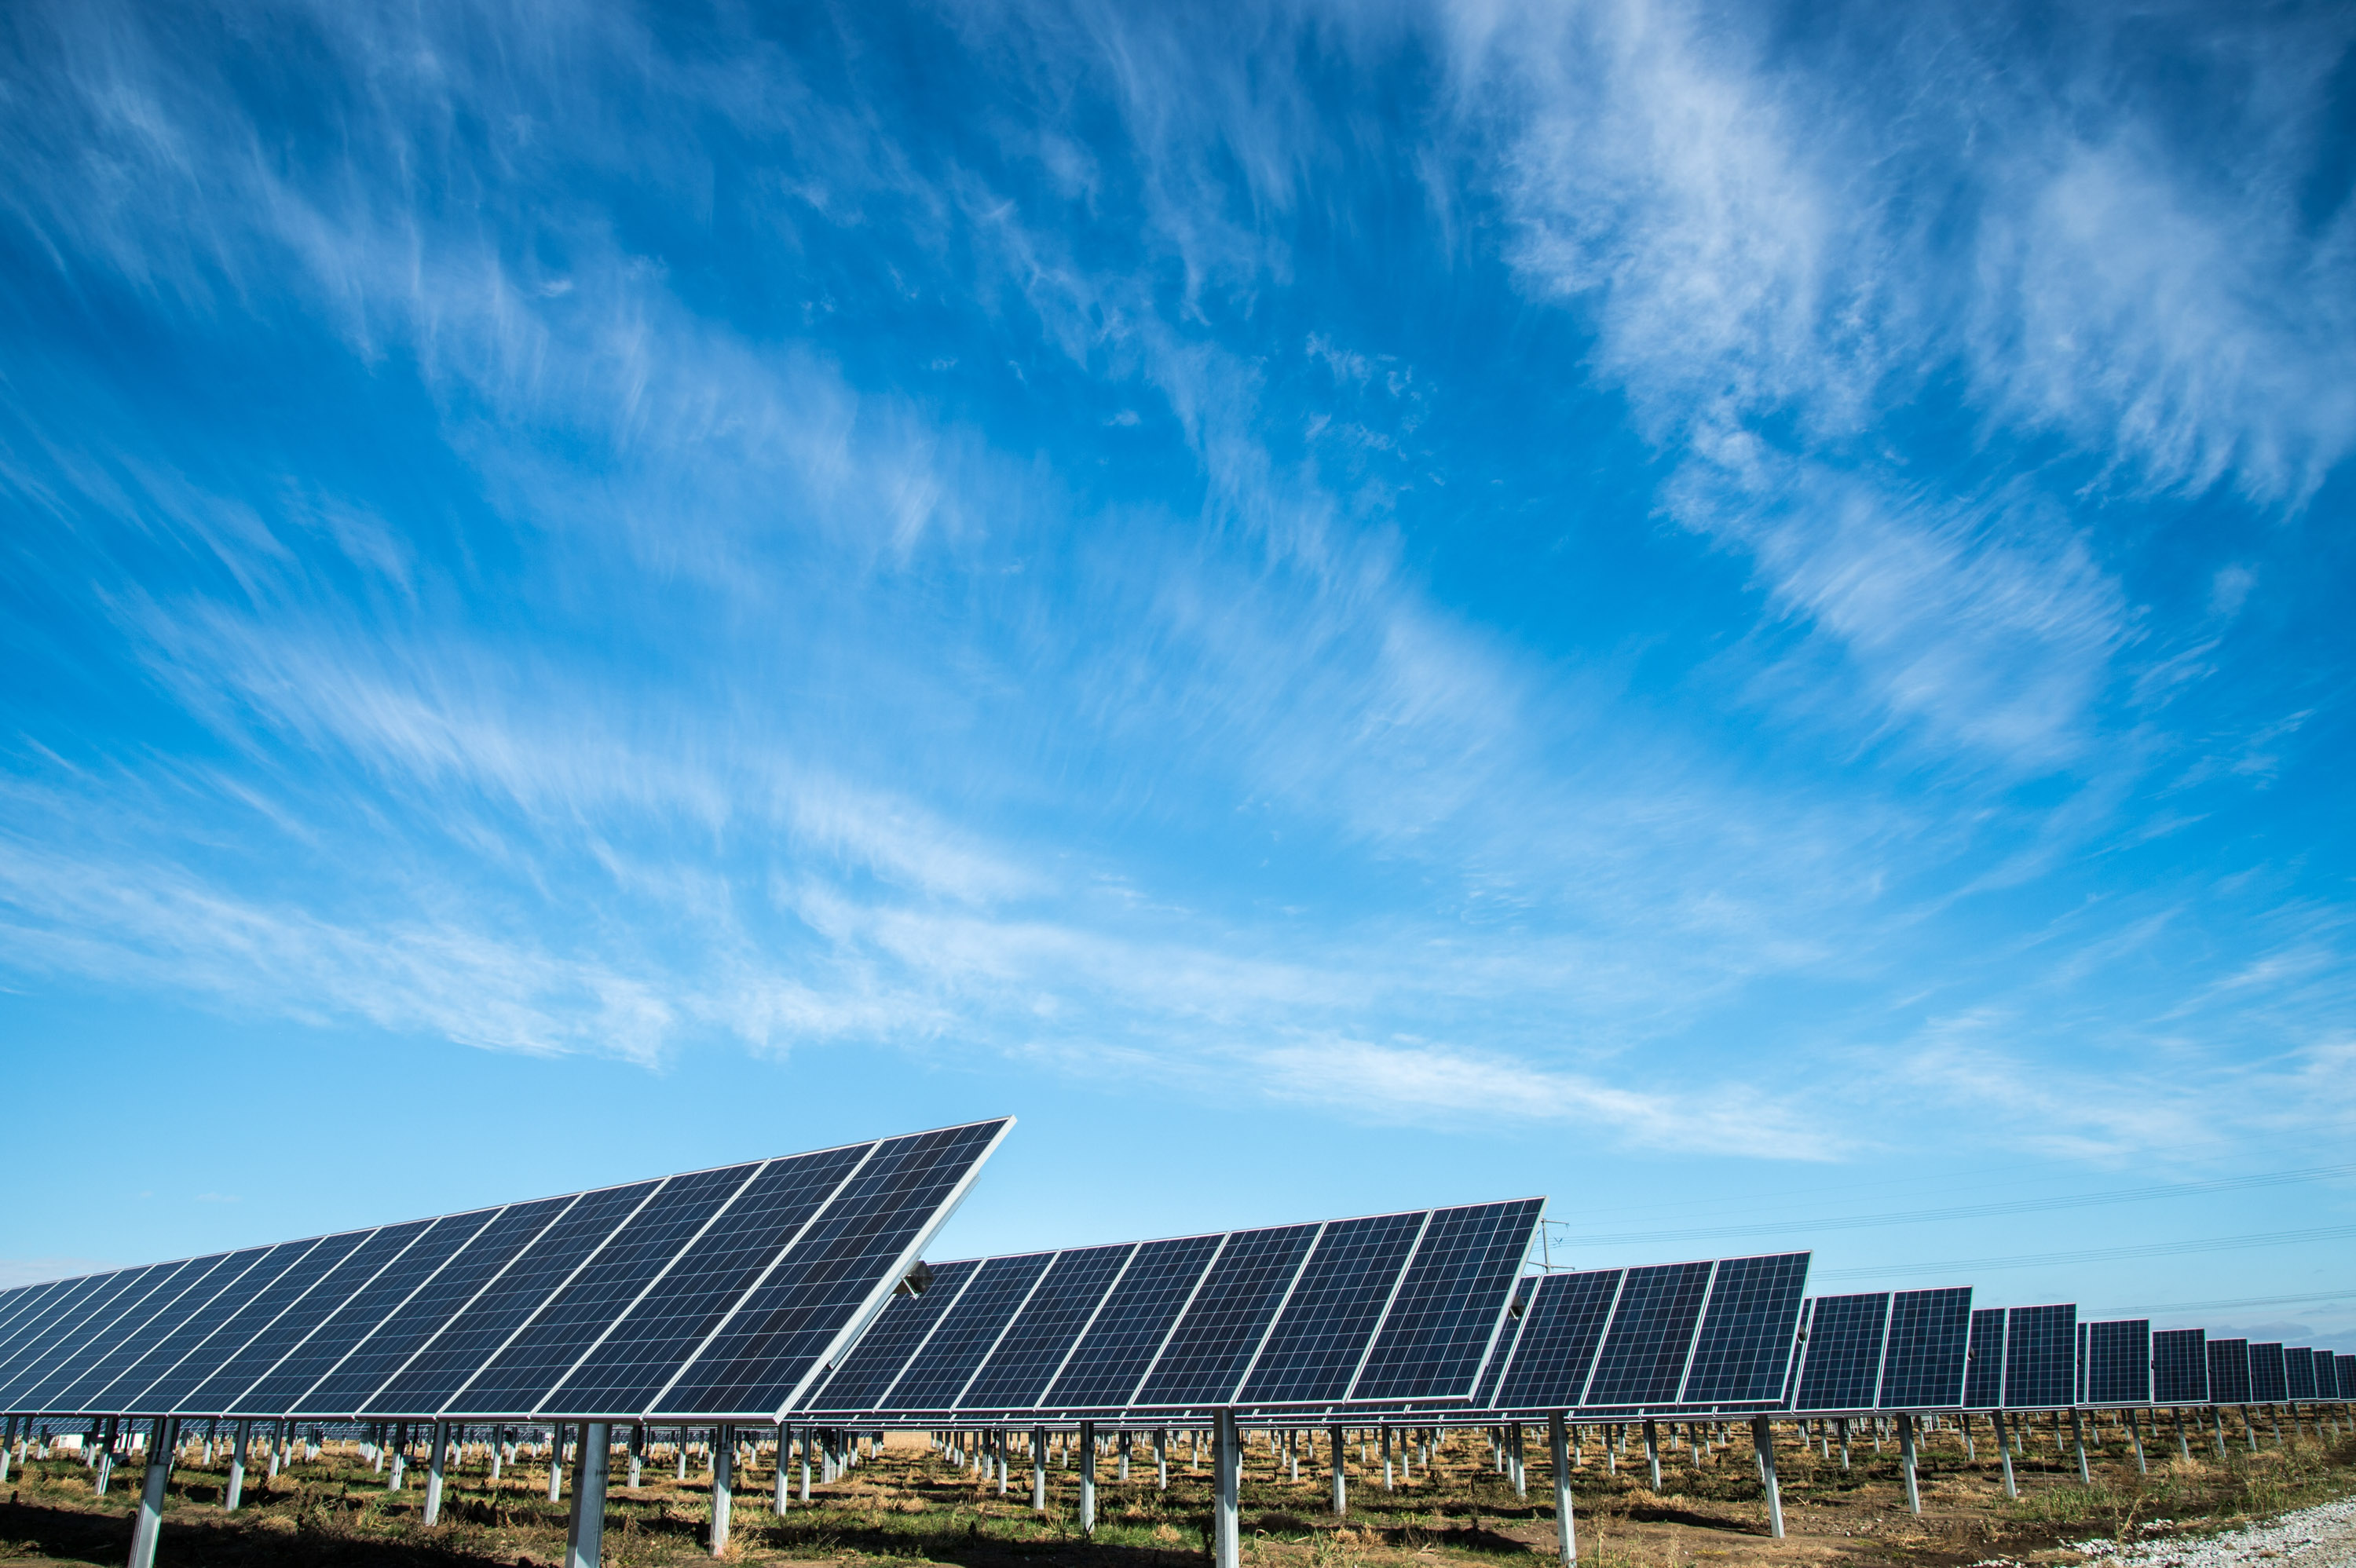 A solar farm in Lincoln, Nebraska.